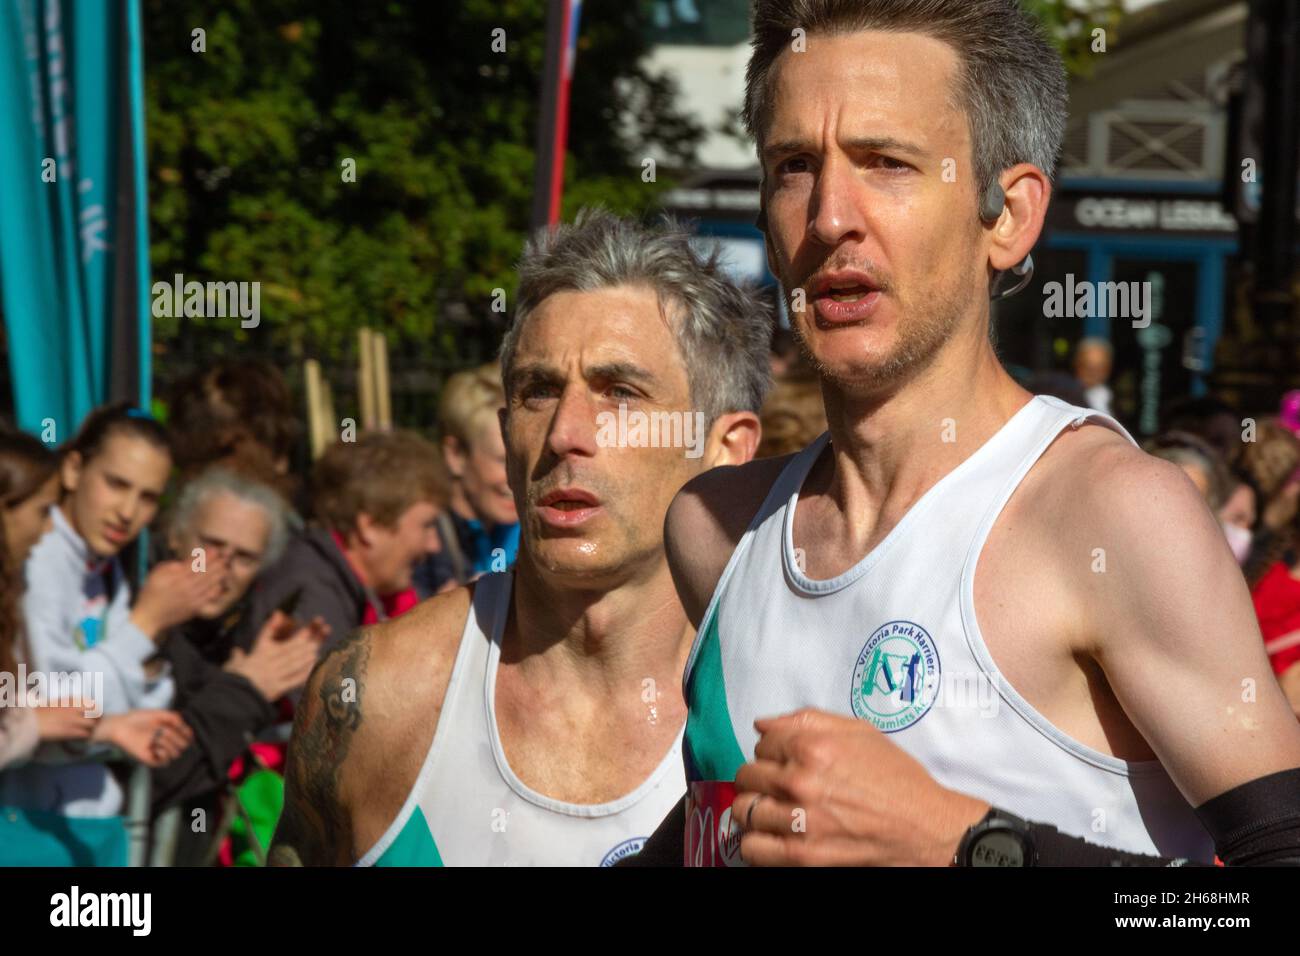 Faces of men running, Virgin Money London Marathon 2021 at the 25 mile point, Victoria Embankment. Stock Photo